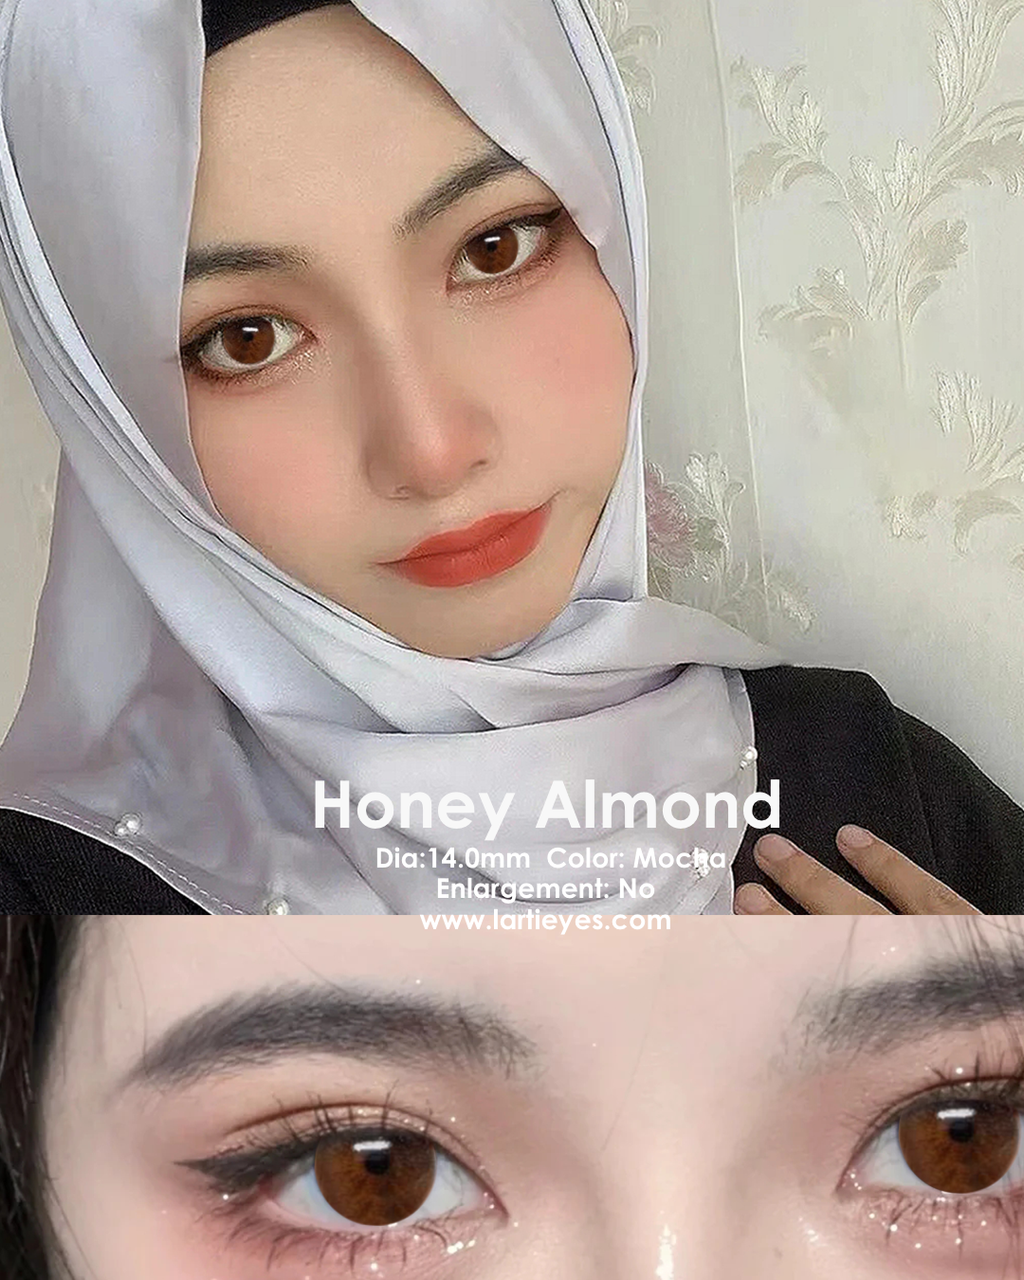 Honey Almond Mocha model 3